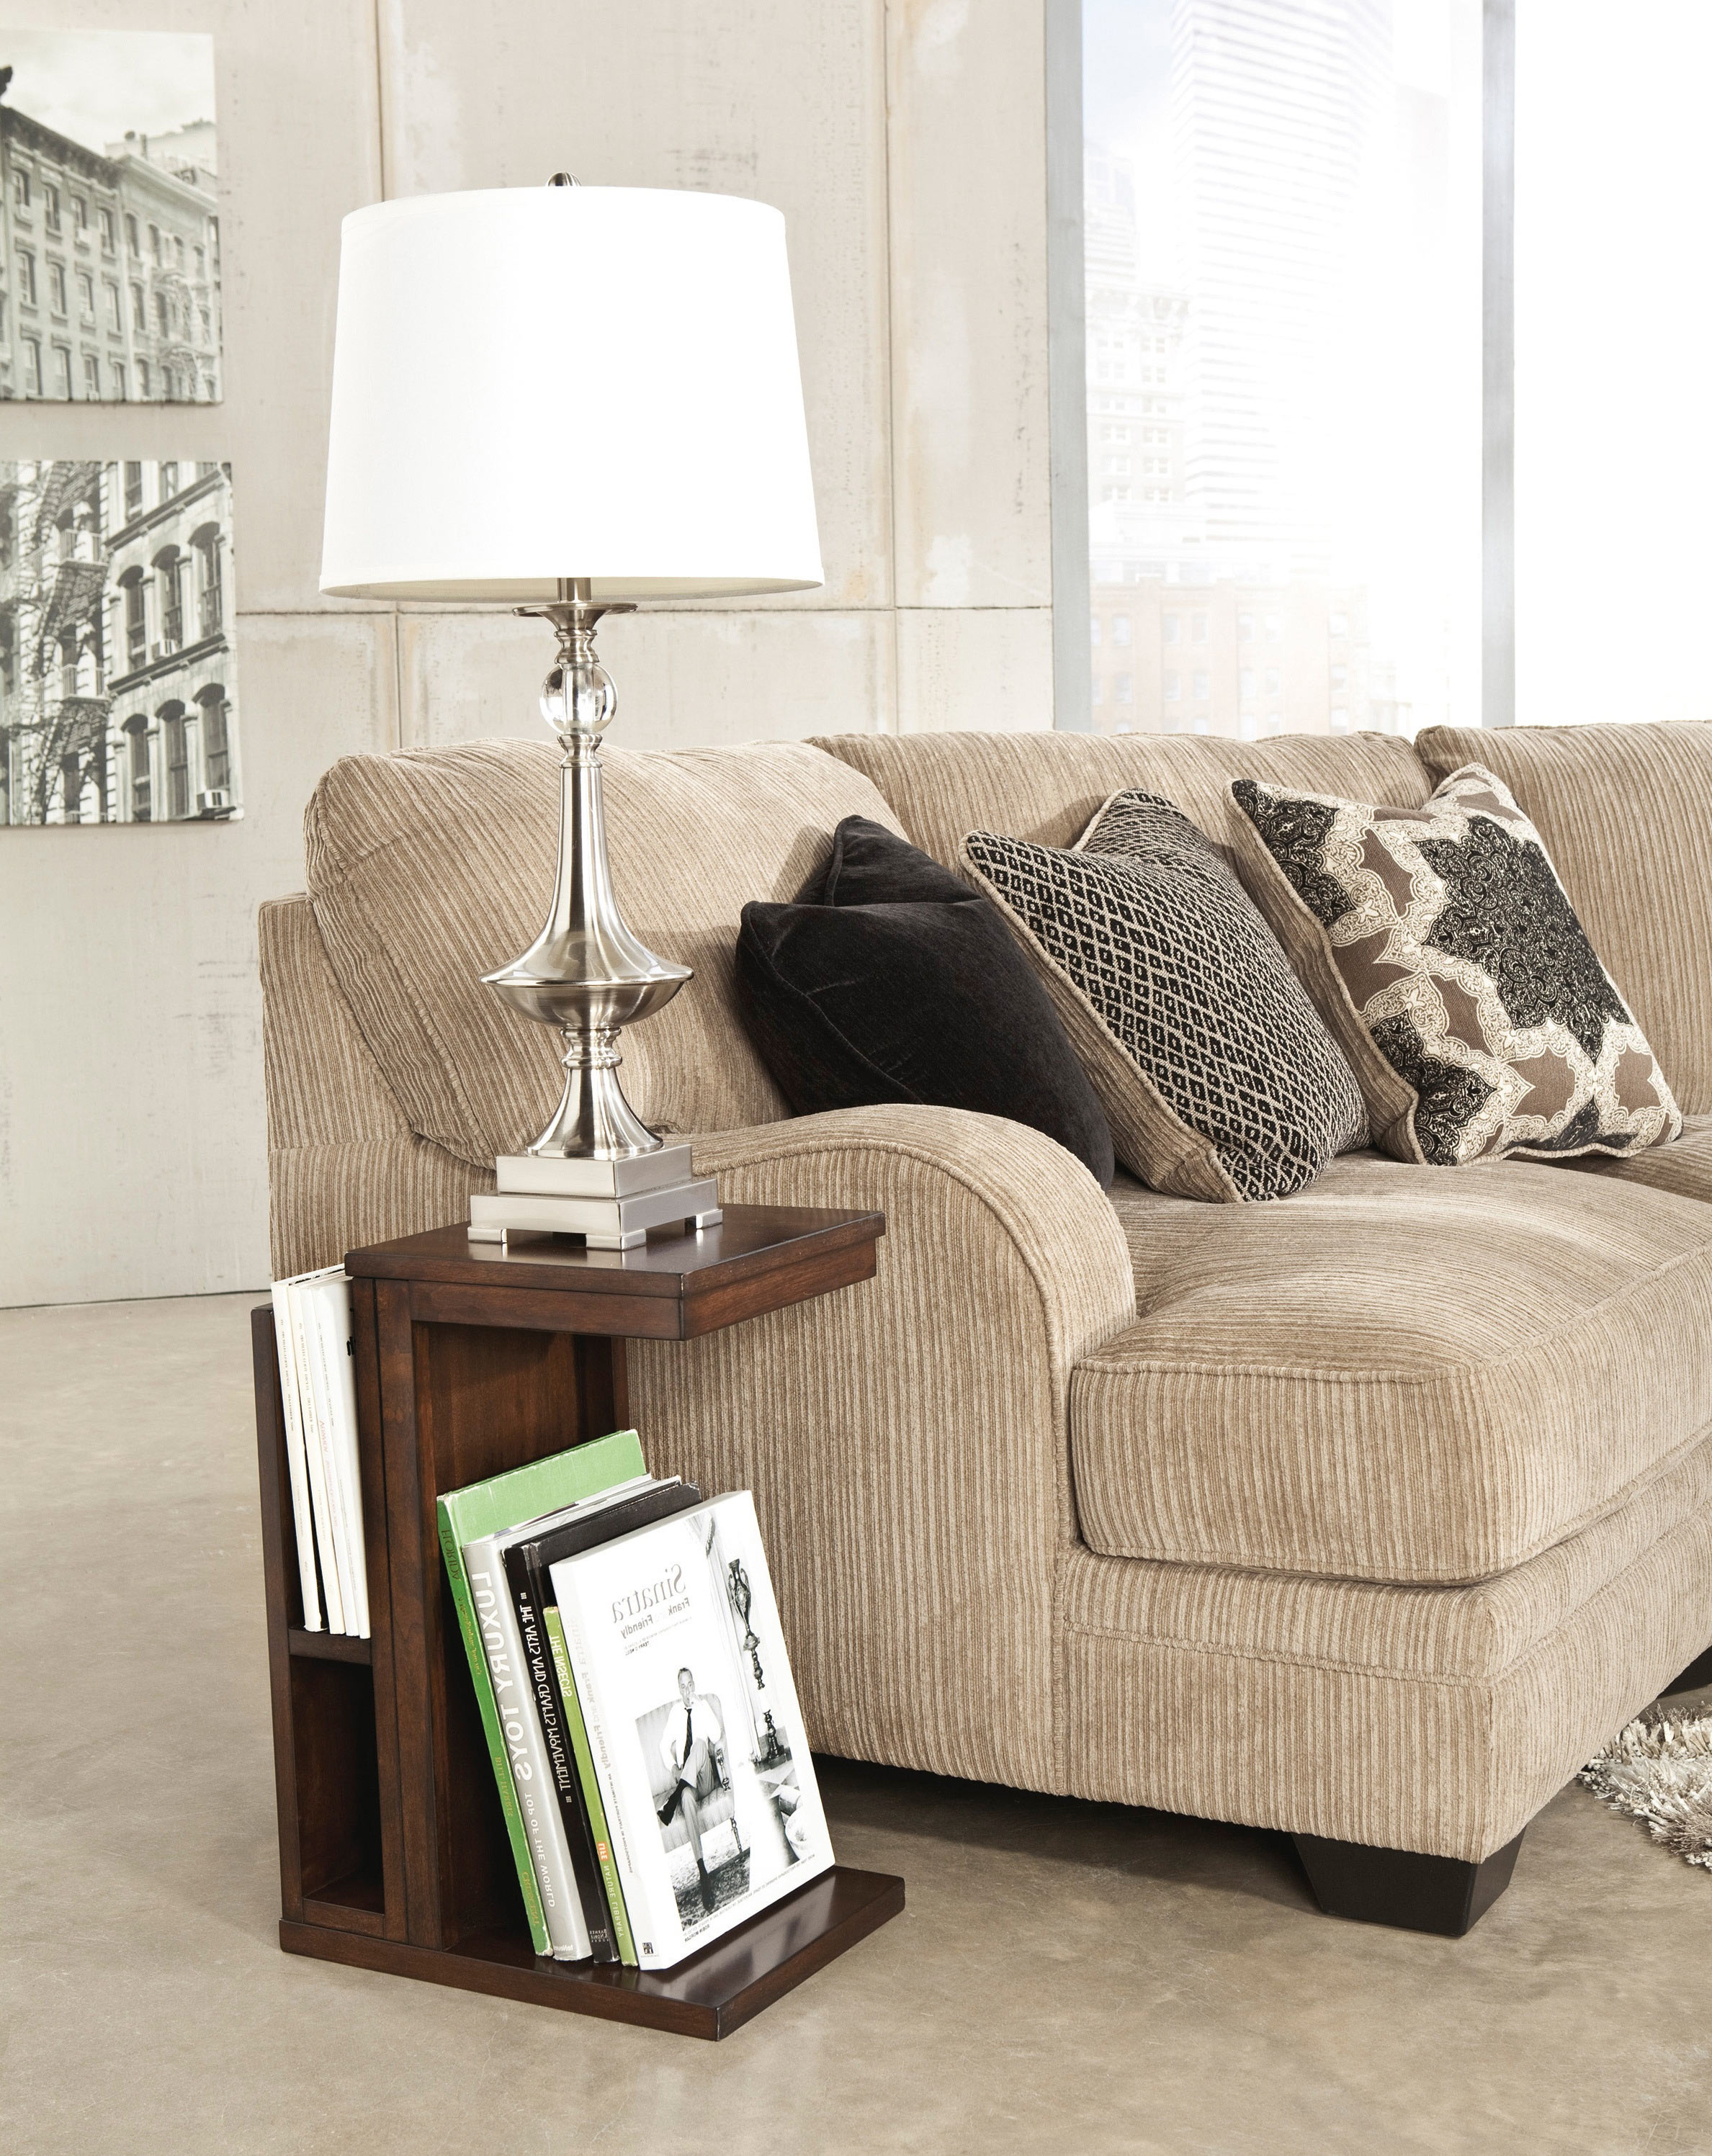 Best Table Lamps for Living Room Lighting Ideas | Roy Home Design